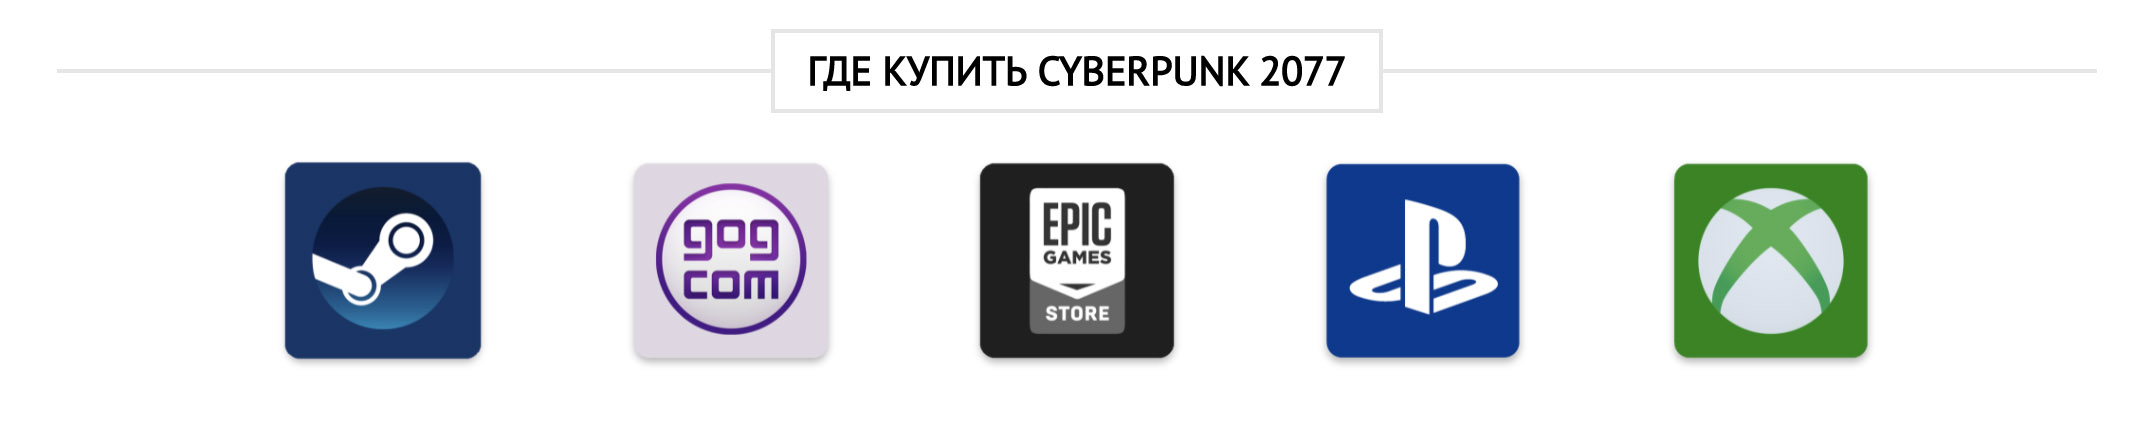 cyberpunk-2077-gde-kupit-324322344.jpg